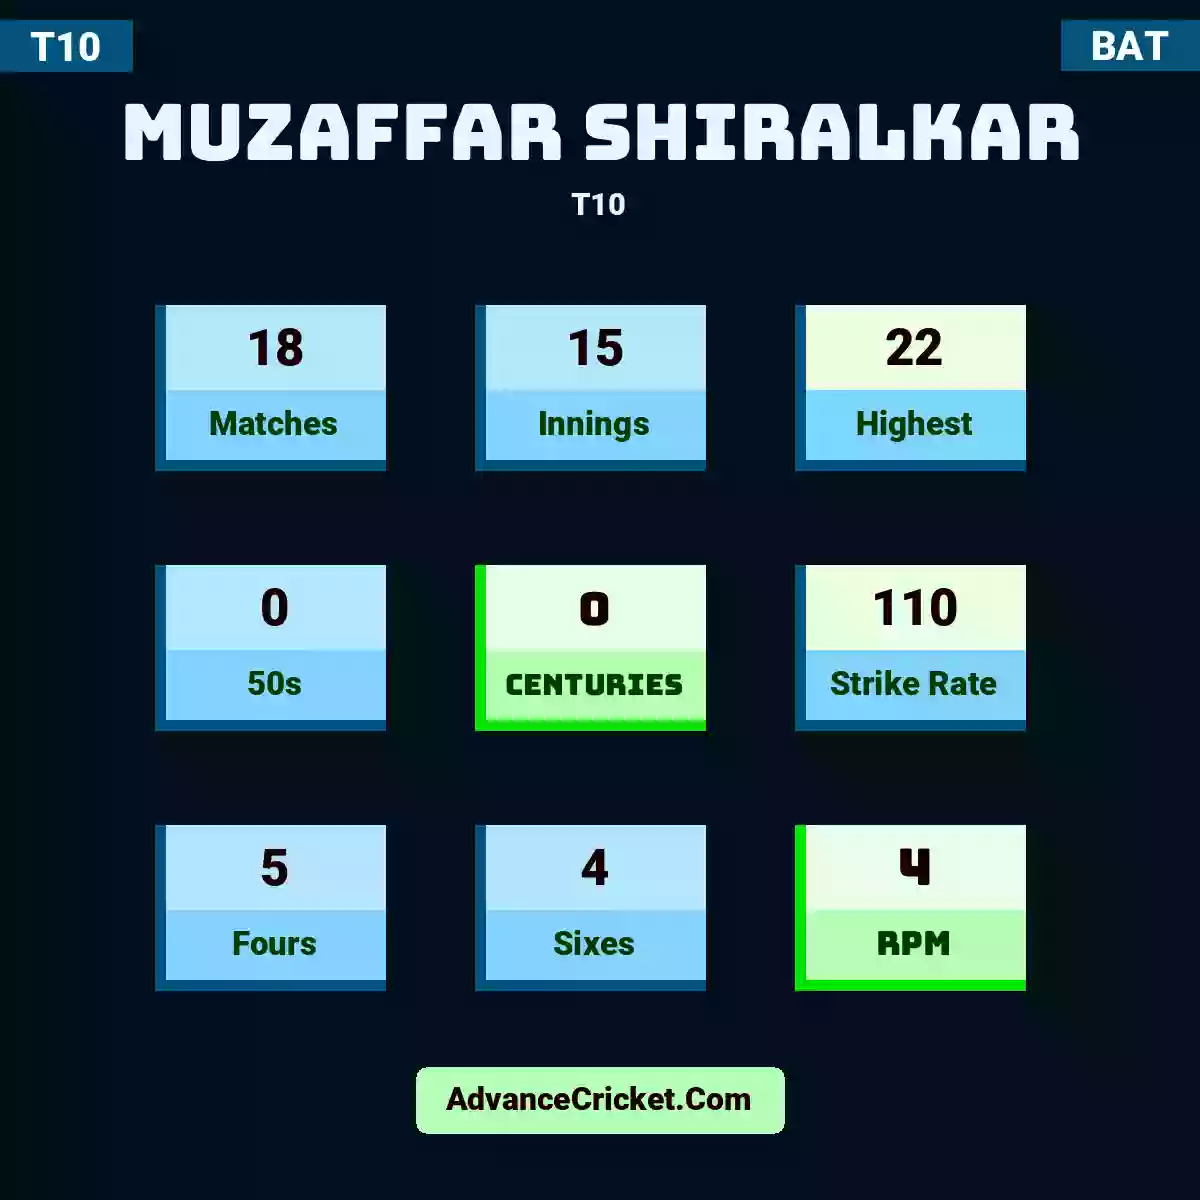 Muzaffar Shiralkar T10 , Muzaffar Shiralkar played 18 matches, scored 22 runs as highest, 0 half-centuries, and 0 centuries, with a strike rate of 110. M.Shiralkar hit 5 fours and 4 sixes, with an RPM of 4.